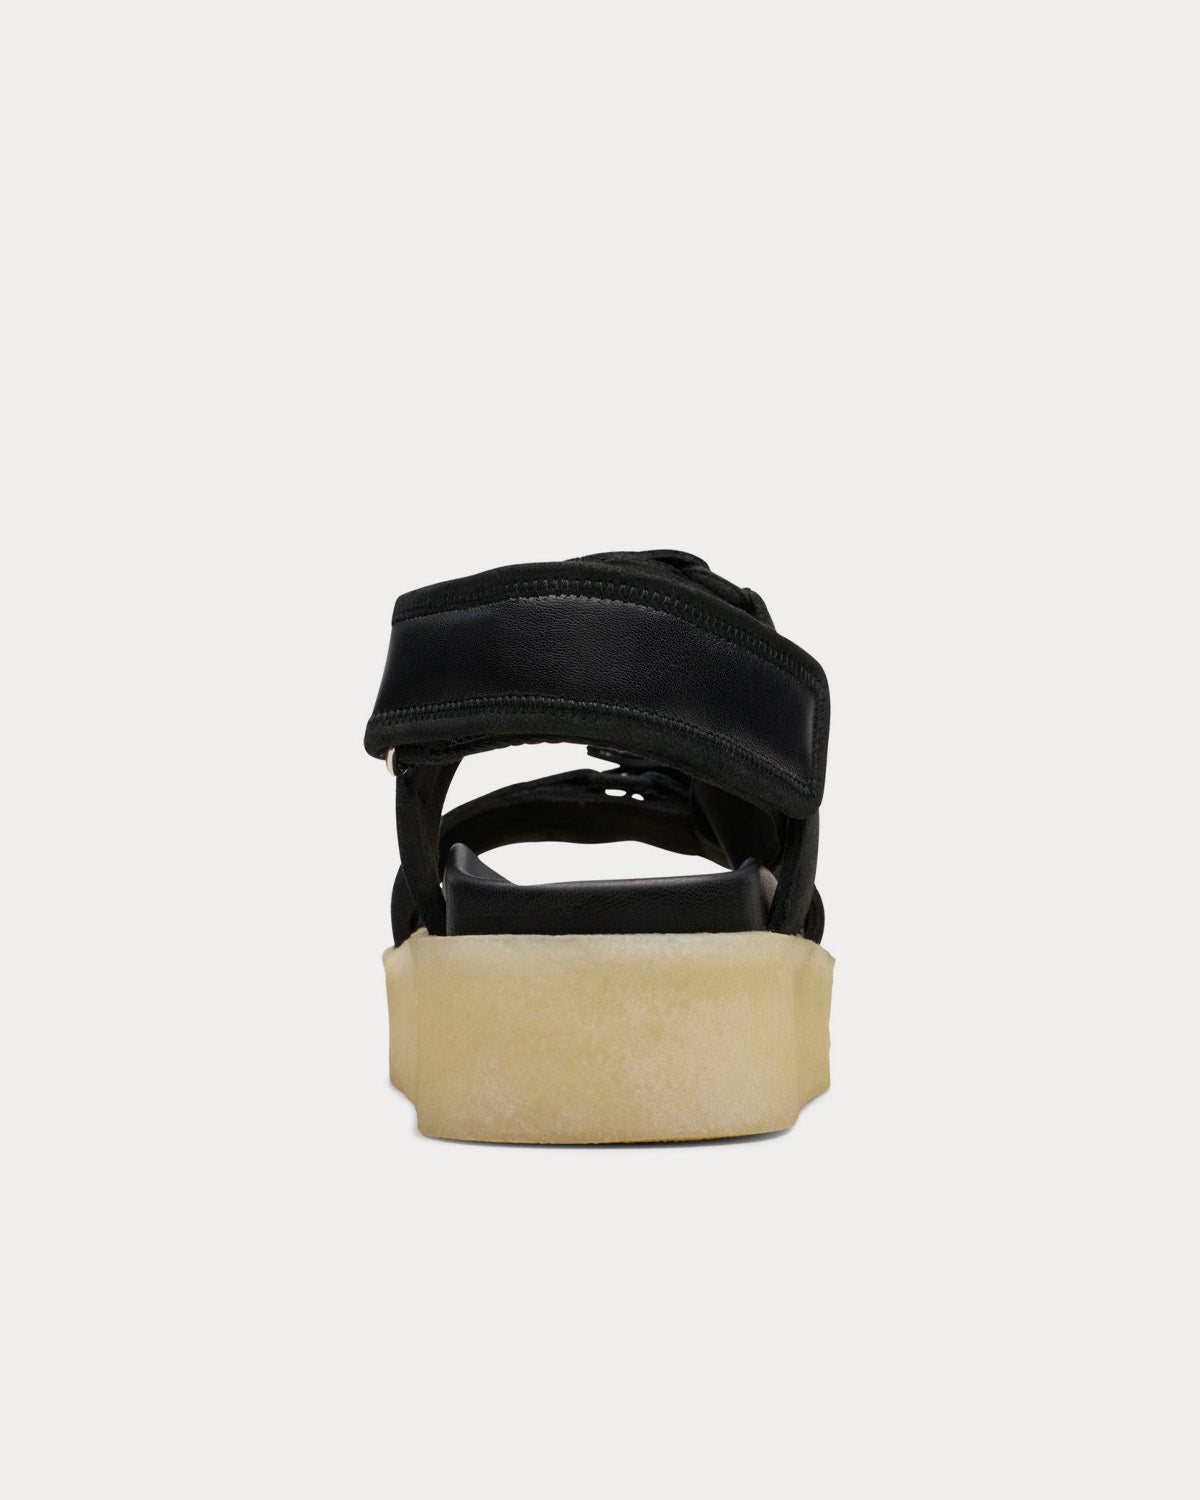 Clarks - Crepe Black Combi Sandals